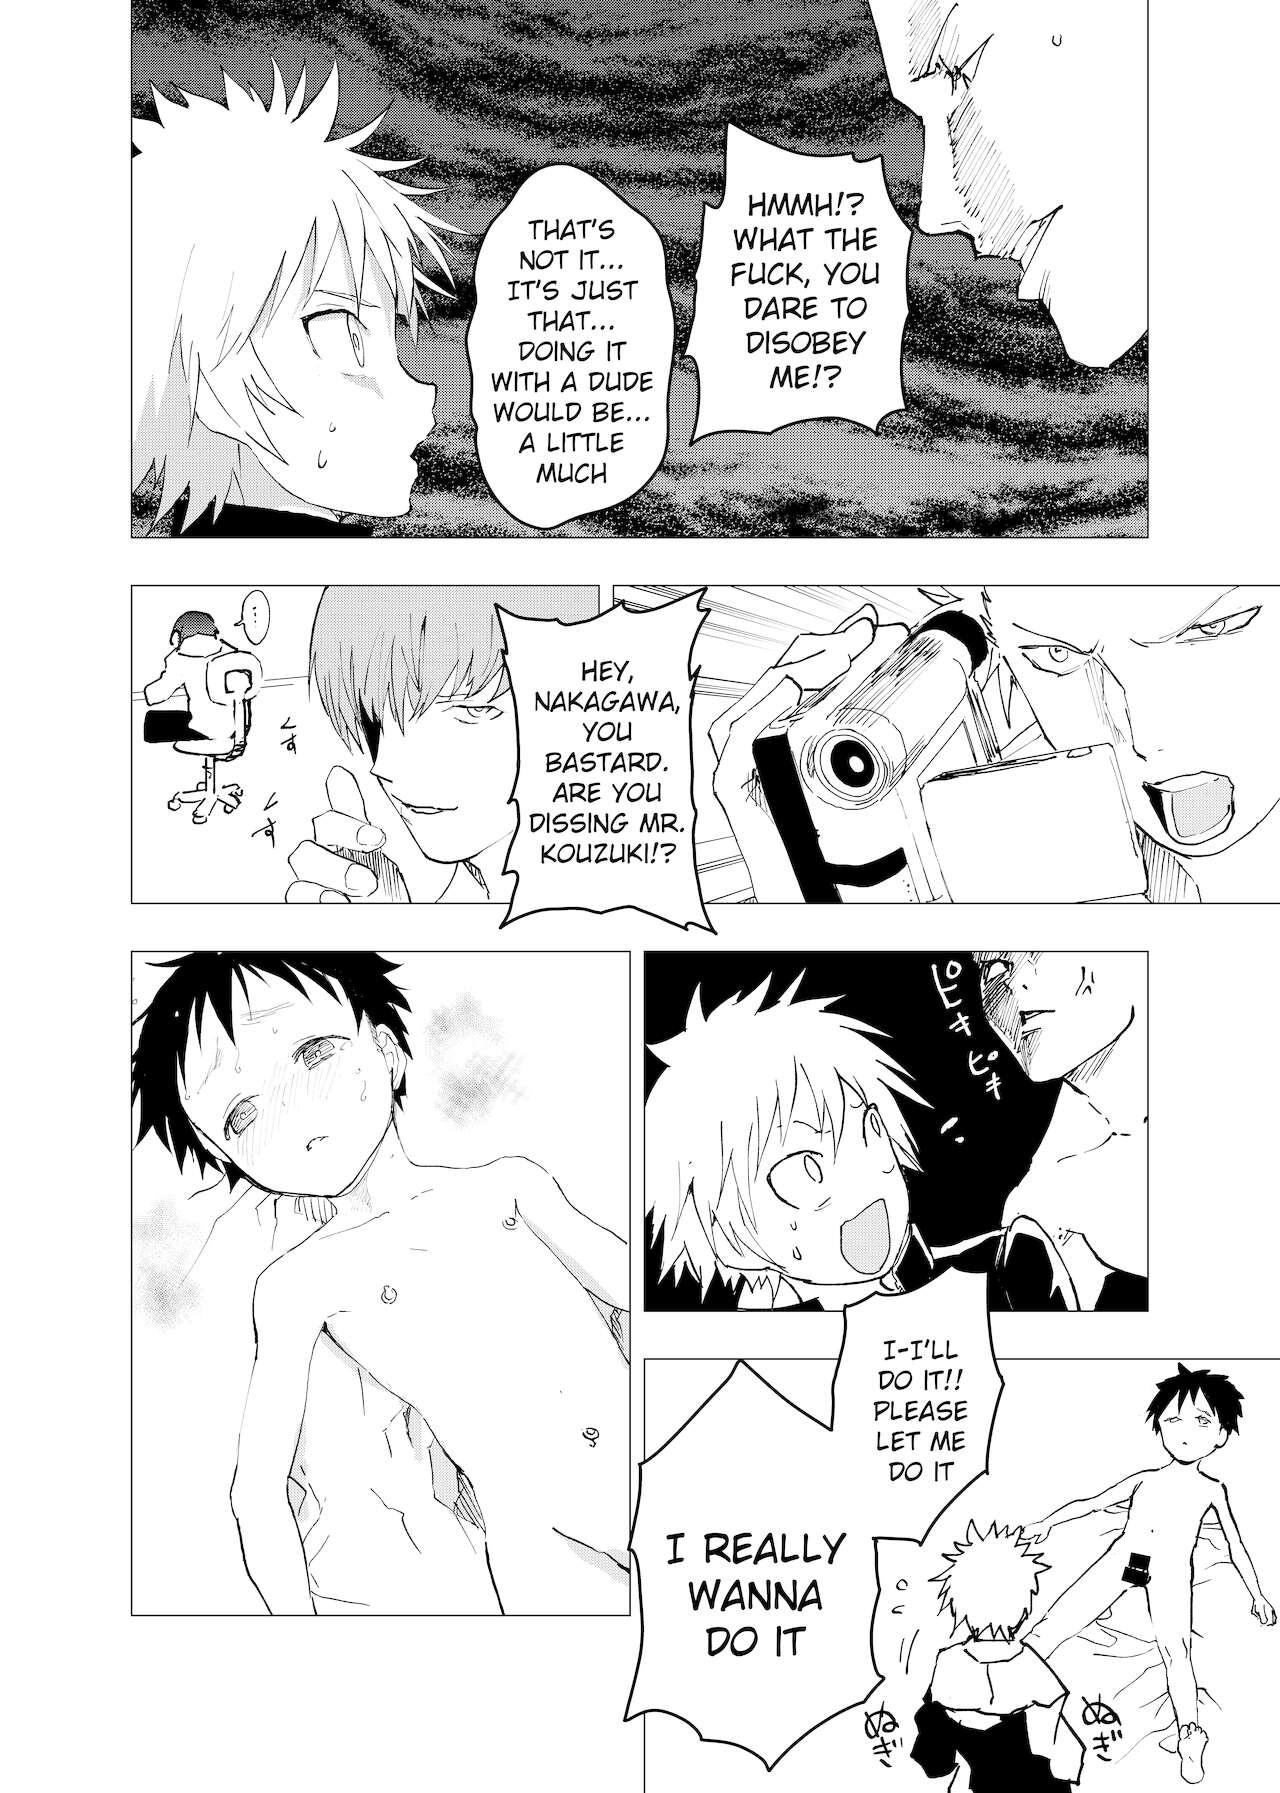 Ibasho ga Nai node Kamimachi shite mita Suterareta Shounen no Ero Manga Ch. 6 | A Dirty Manga About a Boy Who Got Abandoned and Is Waiting for Someone To Save Him Ch. 6 27